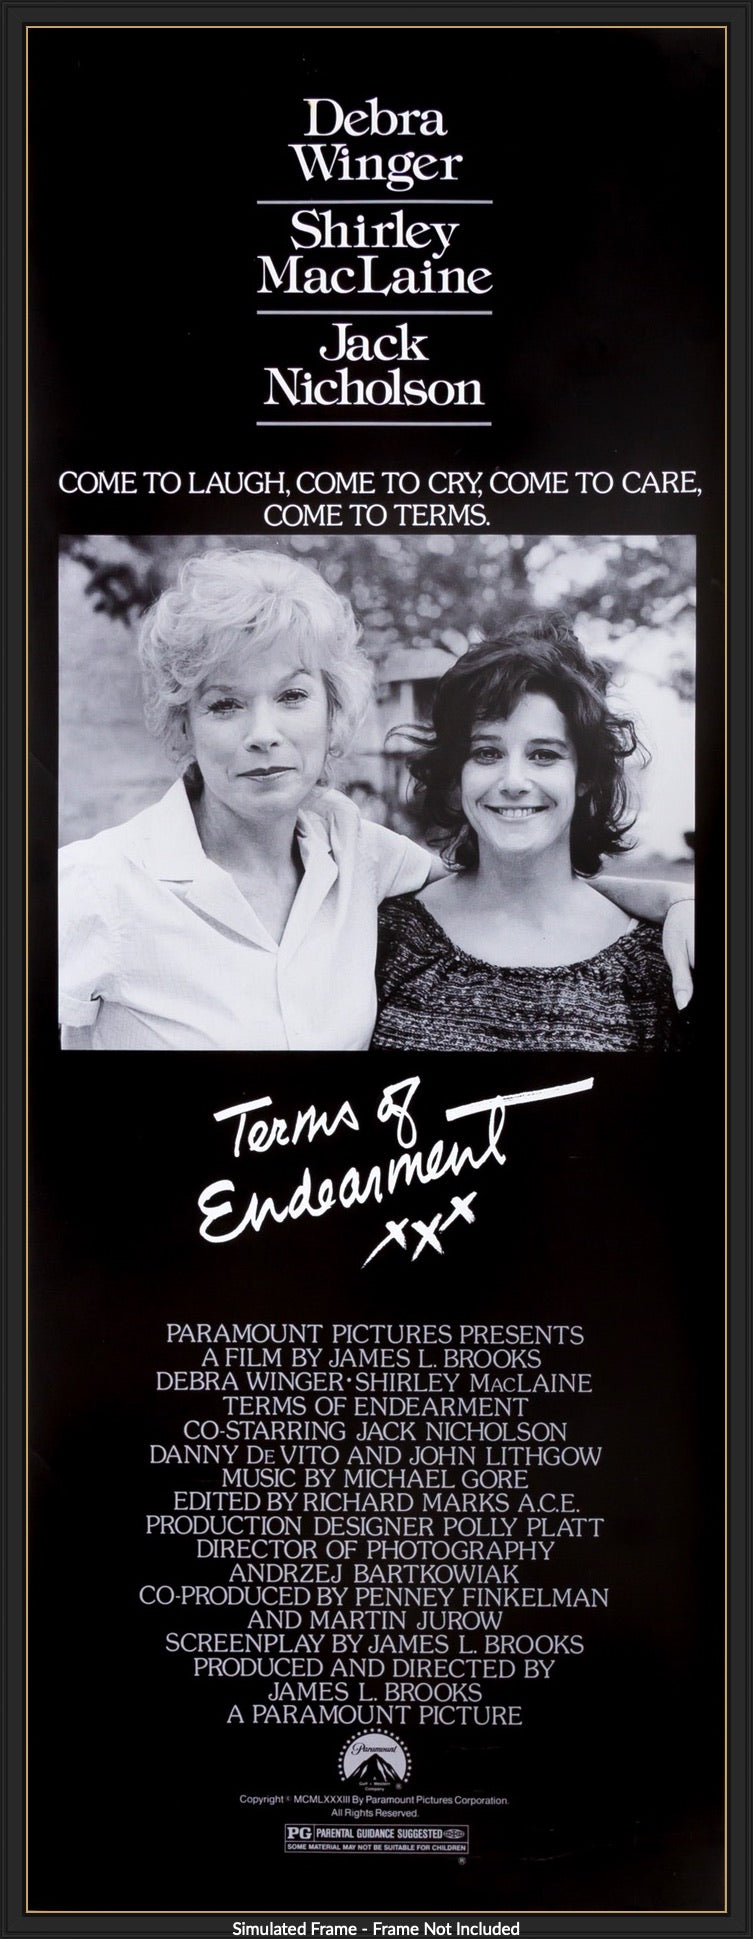 Terms of Endearment (1983) original movie poster for sale at Original Film Art